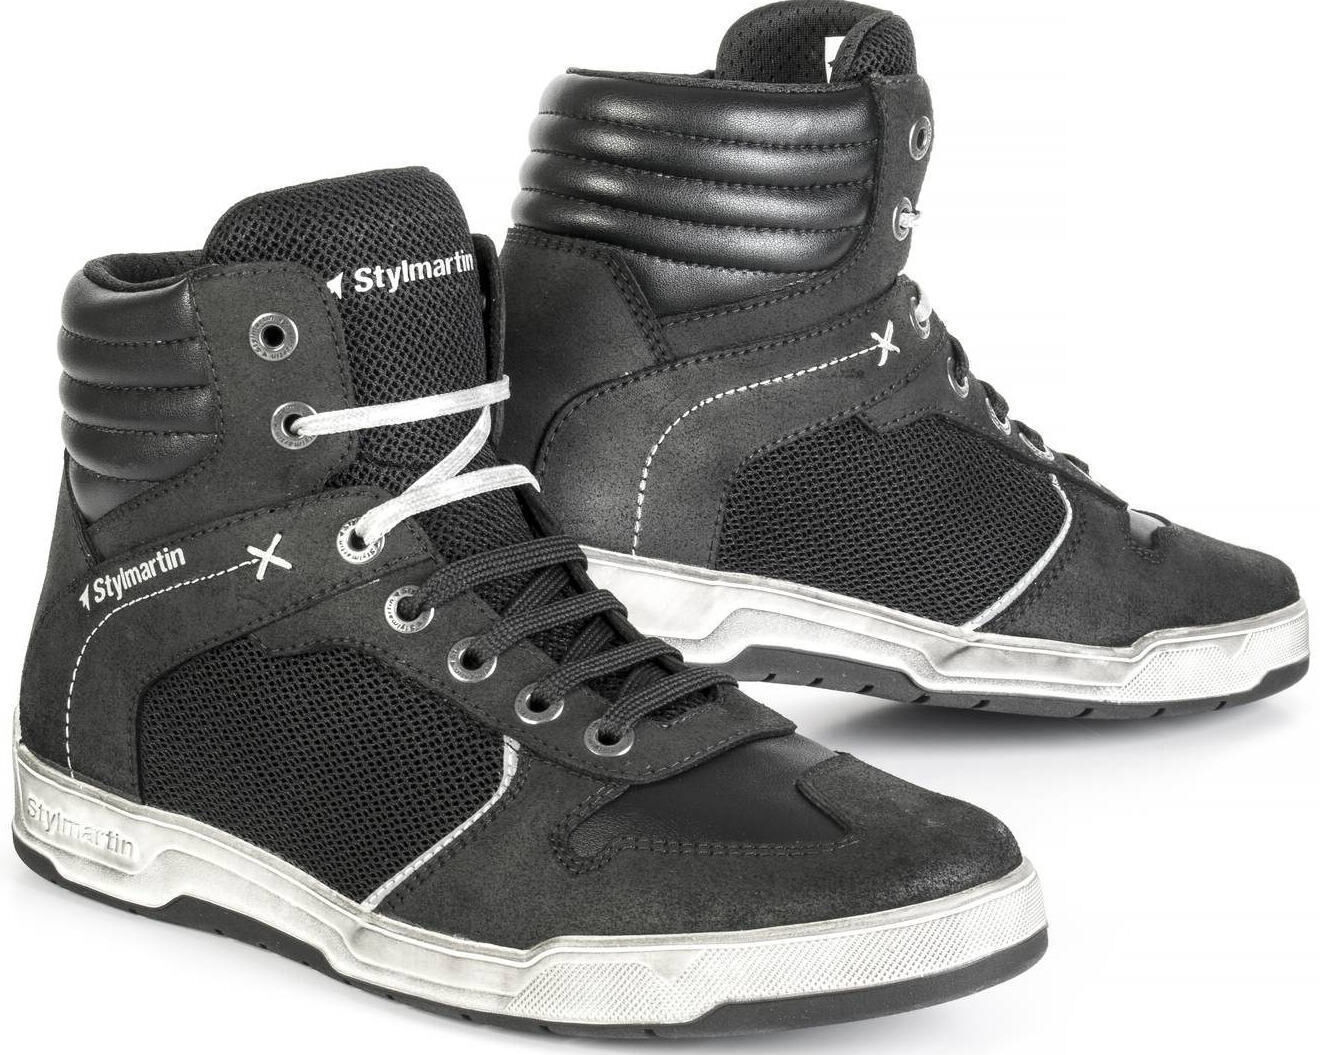 Stylmartin Atom Zapatos de moto - Negro Blanco (46)